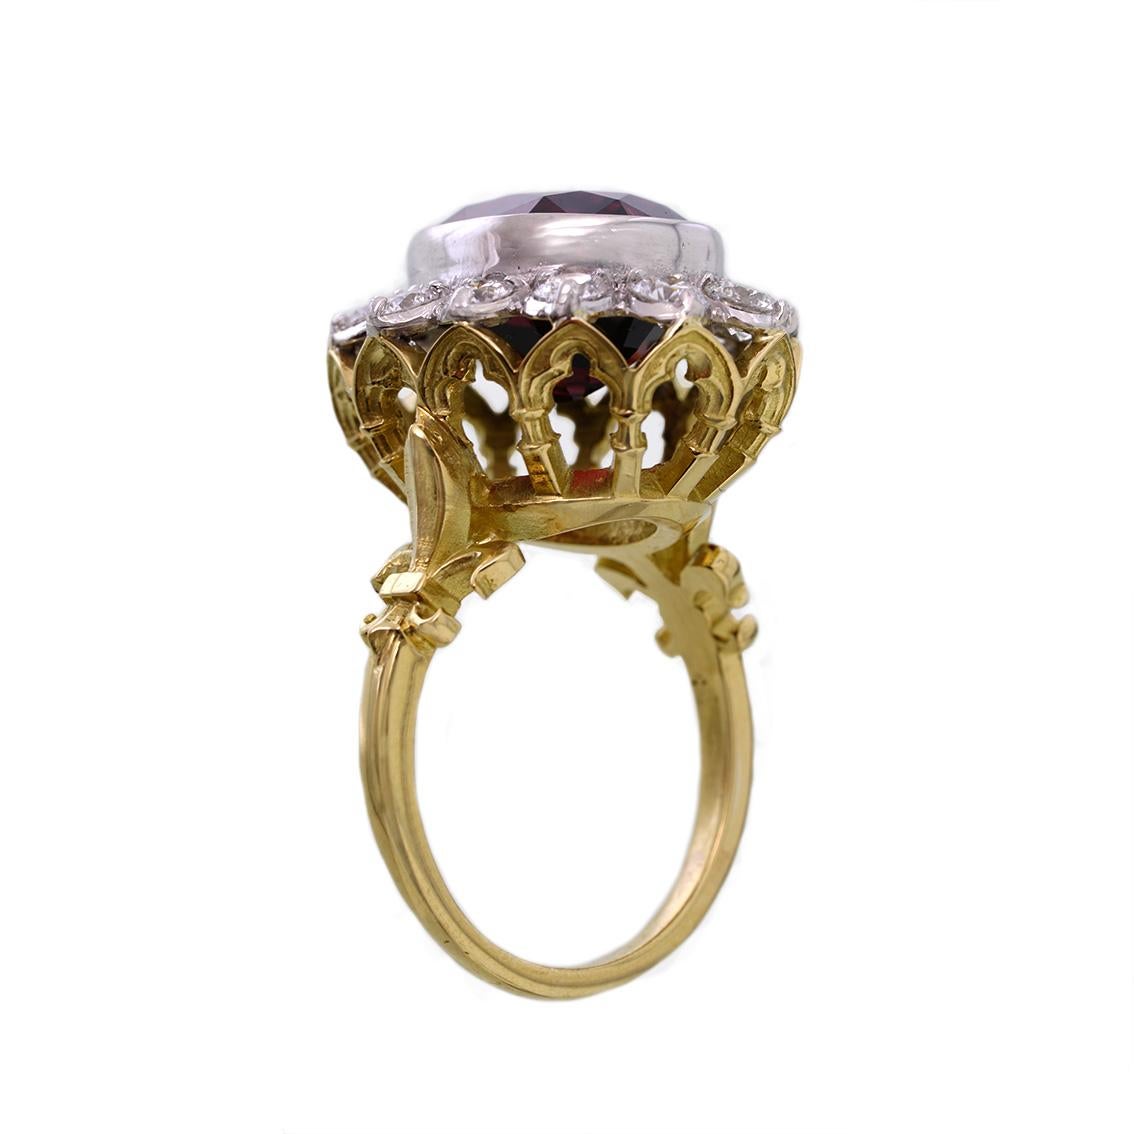 Gothic Revival 18kt Yellow & White Gold, 11 Carat Garnet and 1 Carat Diamond Ring